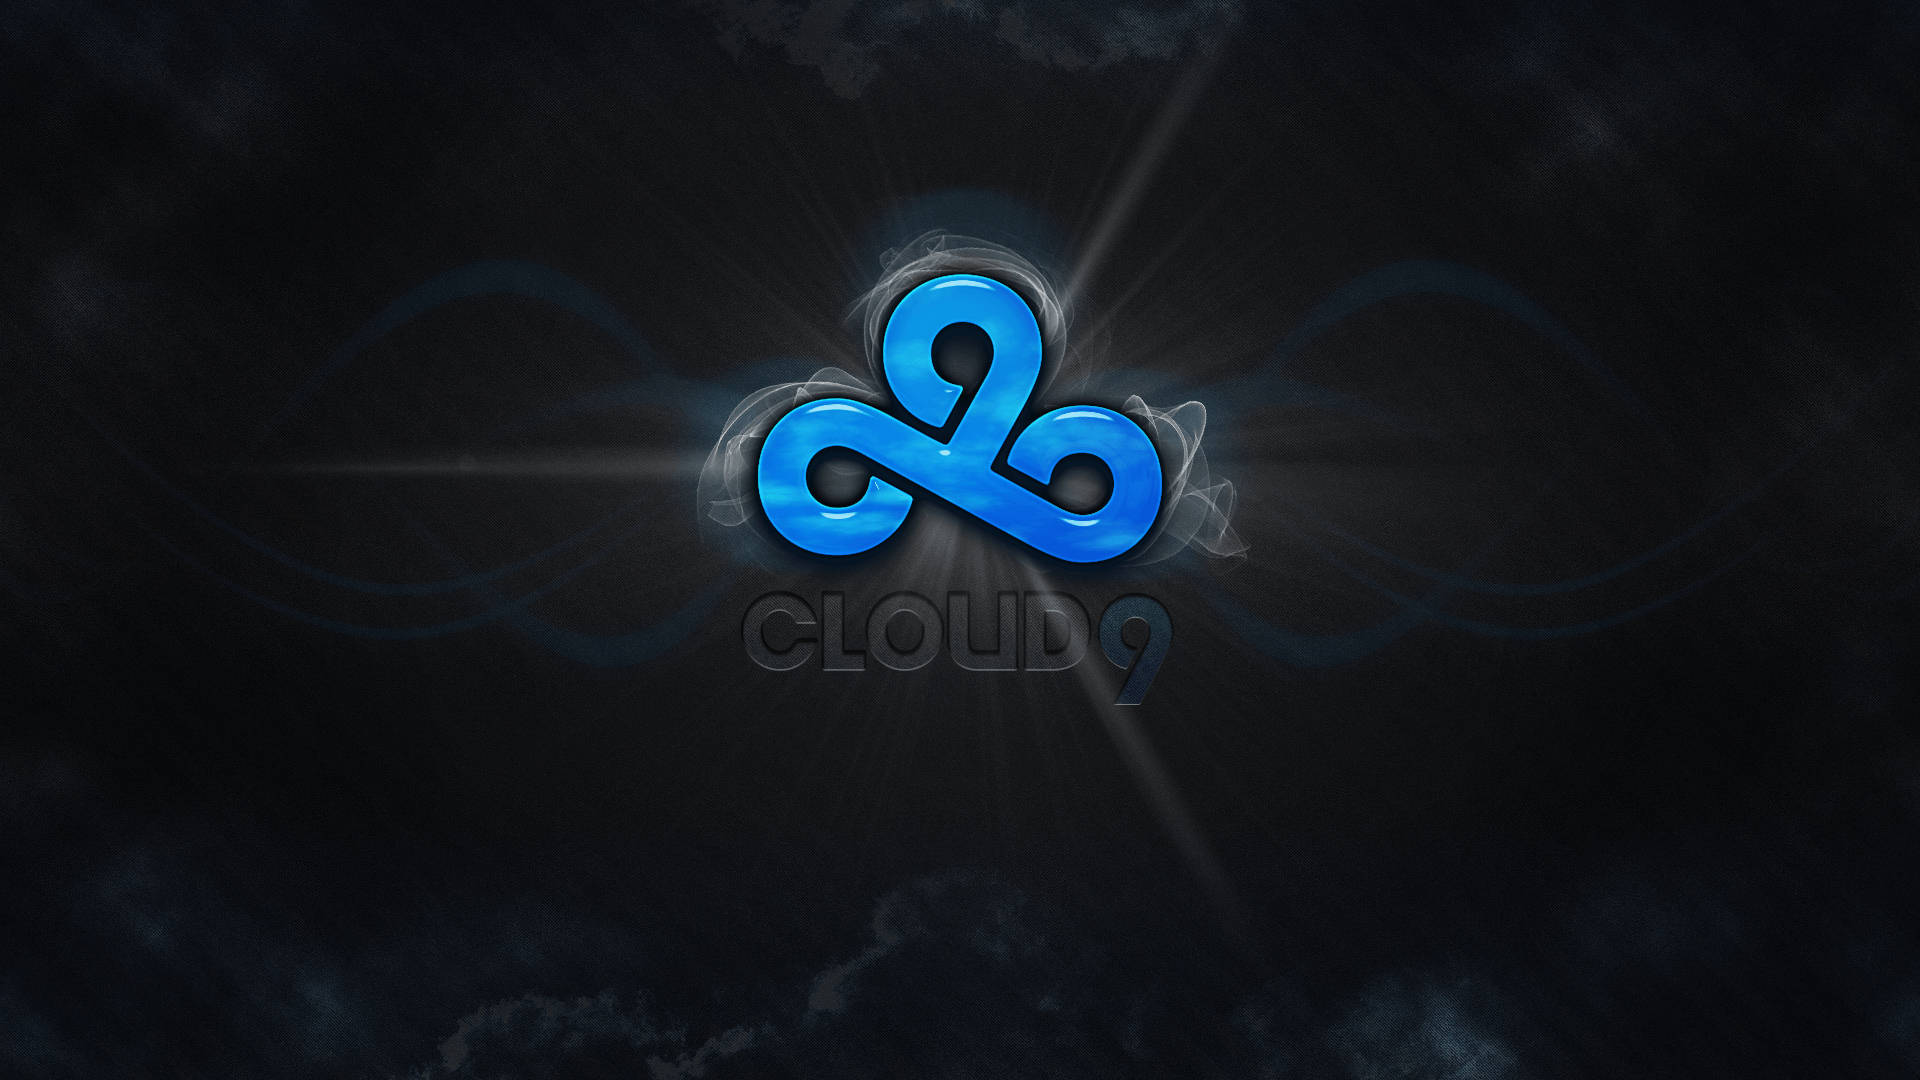 Cloud9 Logo White Aura Effect Background